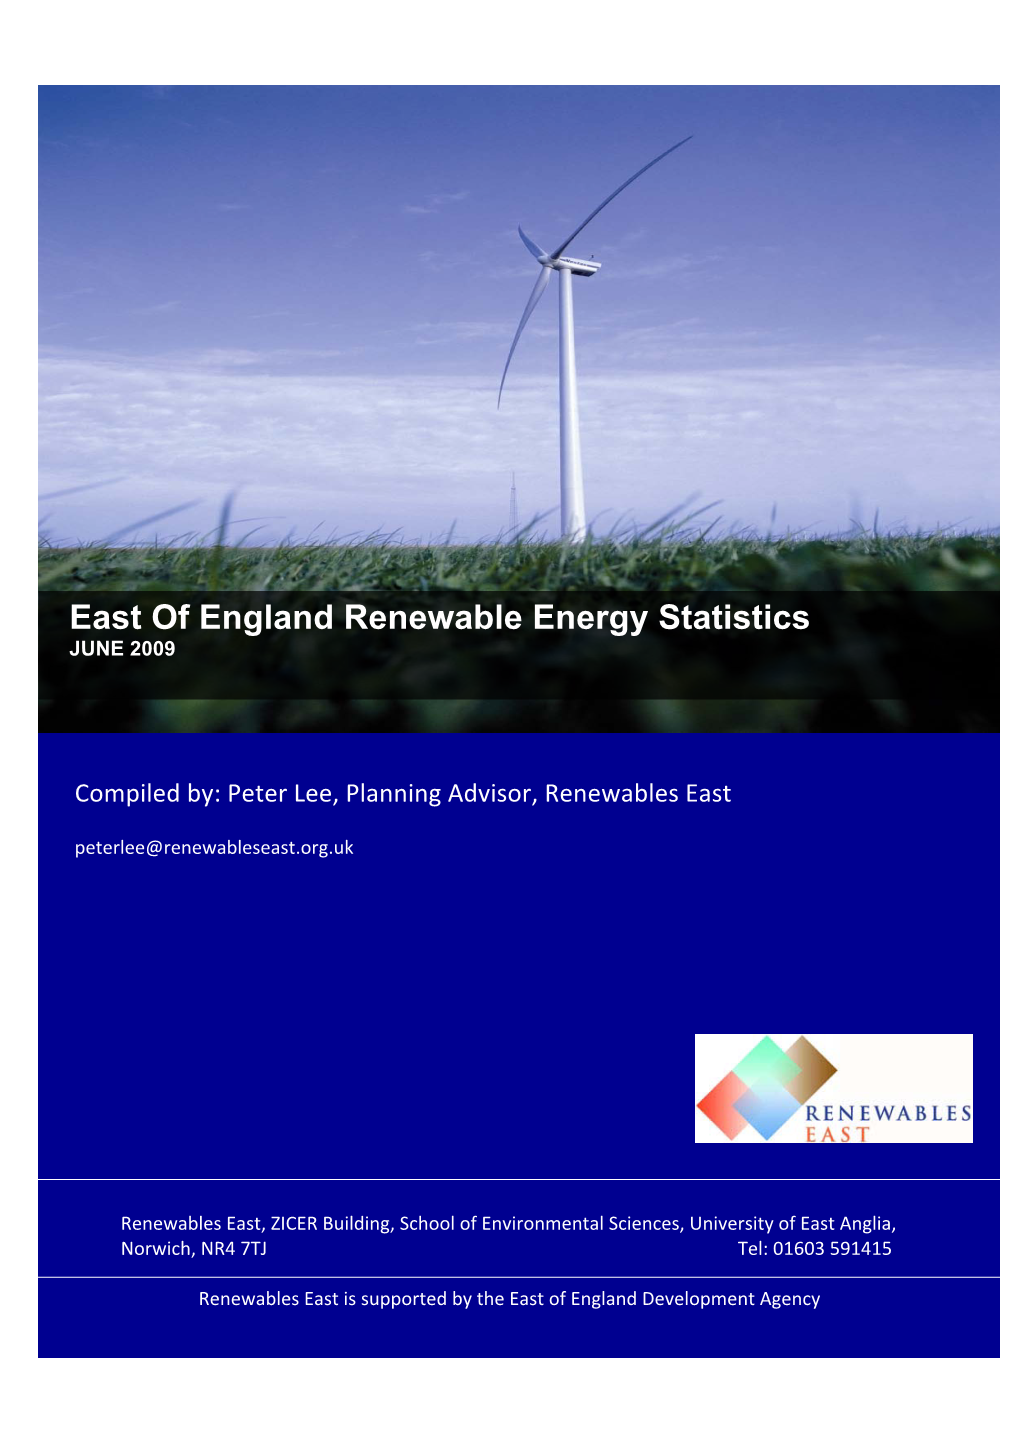 East of England Renewable Energy Statistics JUNE 2009